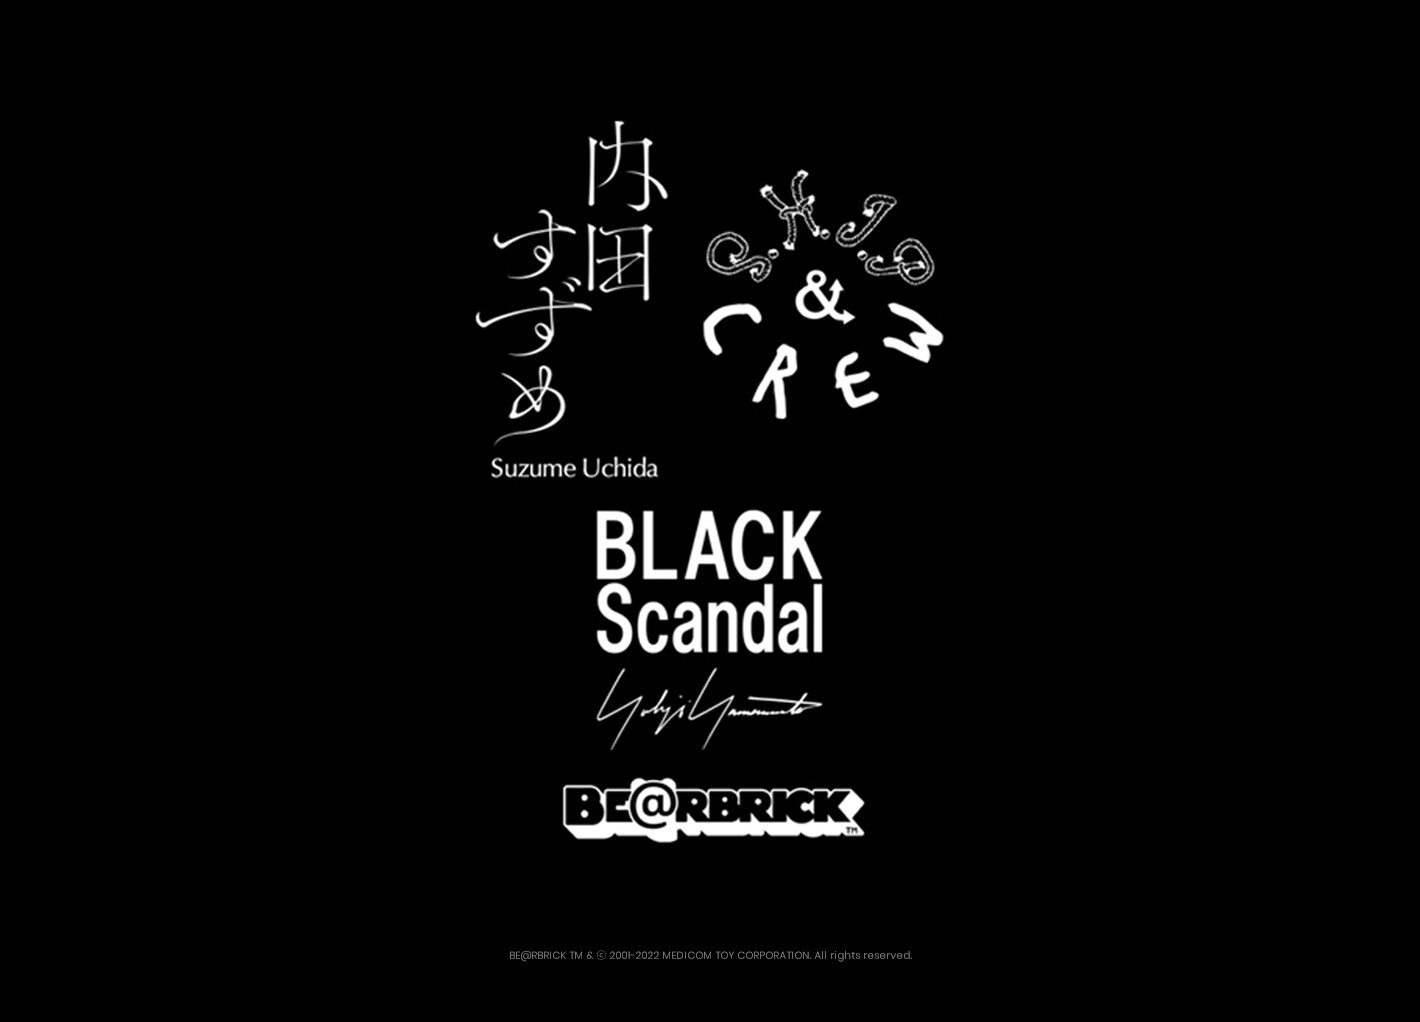 「BE@RBRICK BLACK Scandal Yohji Yamamoto x内田すずめx S.H.I.P&crew」 BE@RBRICK Capsule Collection 6月26日 RELEASE